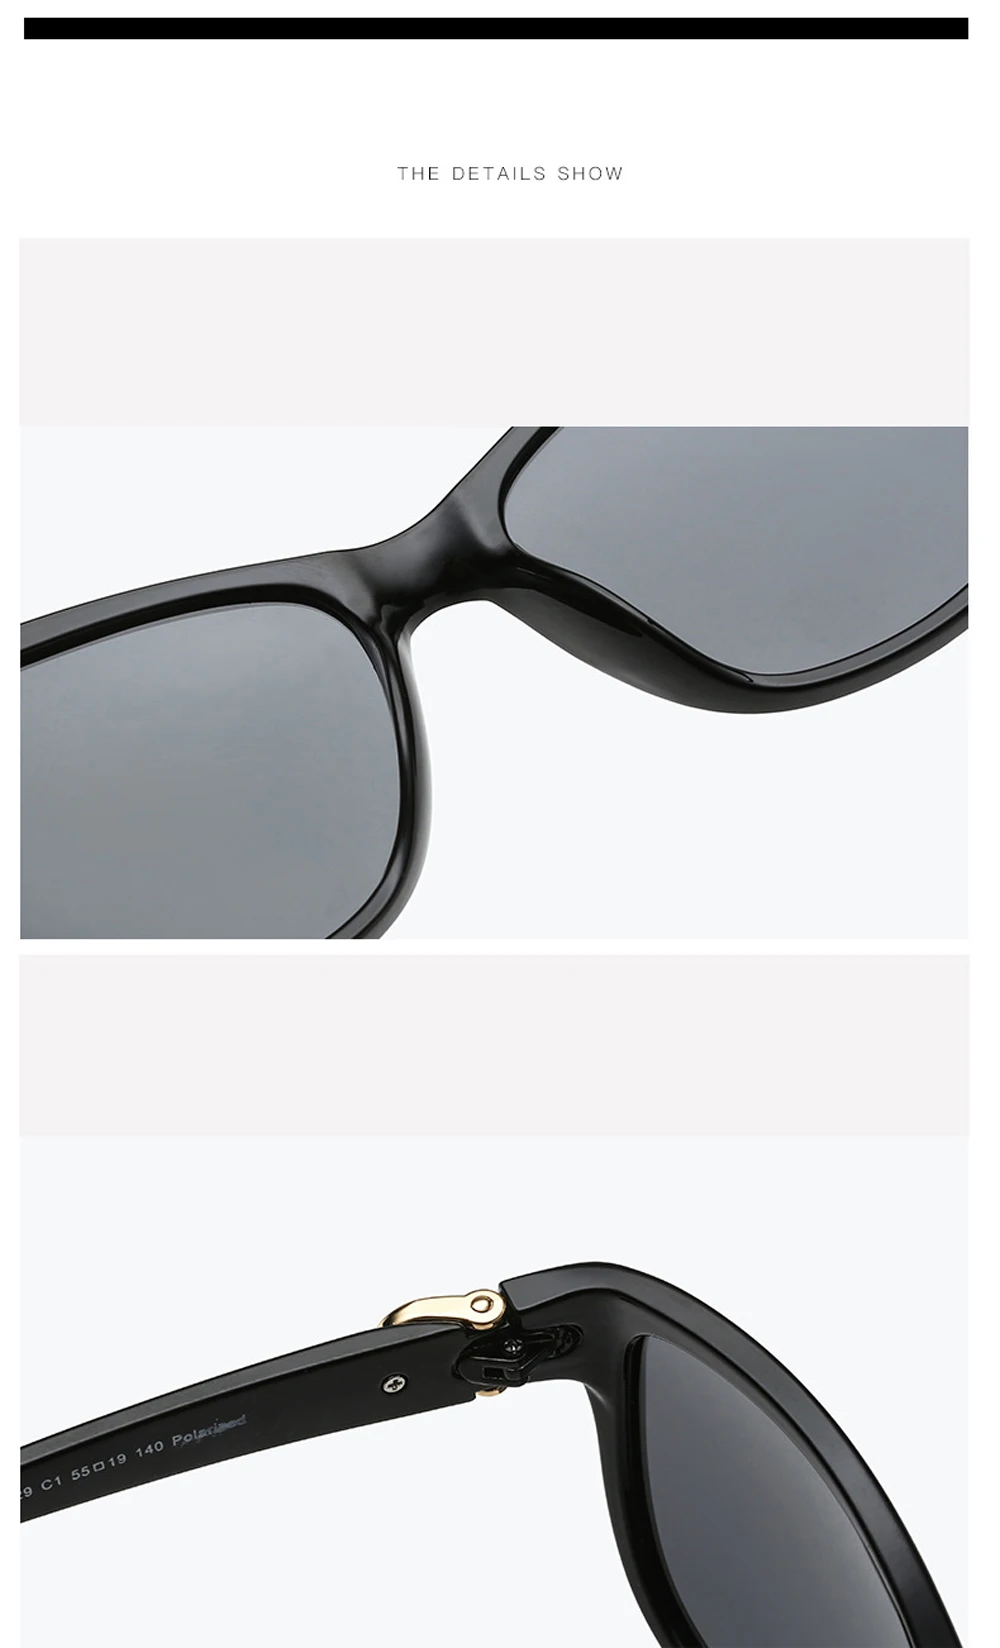 2022 Luxury Brand Design Cat Eye Polarized Sunglasses Men Women Lady Elegant Sun Glasses Female Driving Eyewear Oculos De Sol ray ban sunglasses women